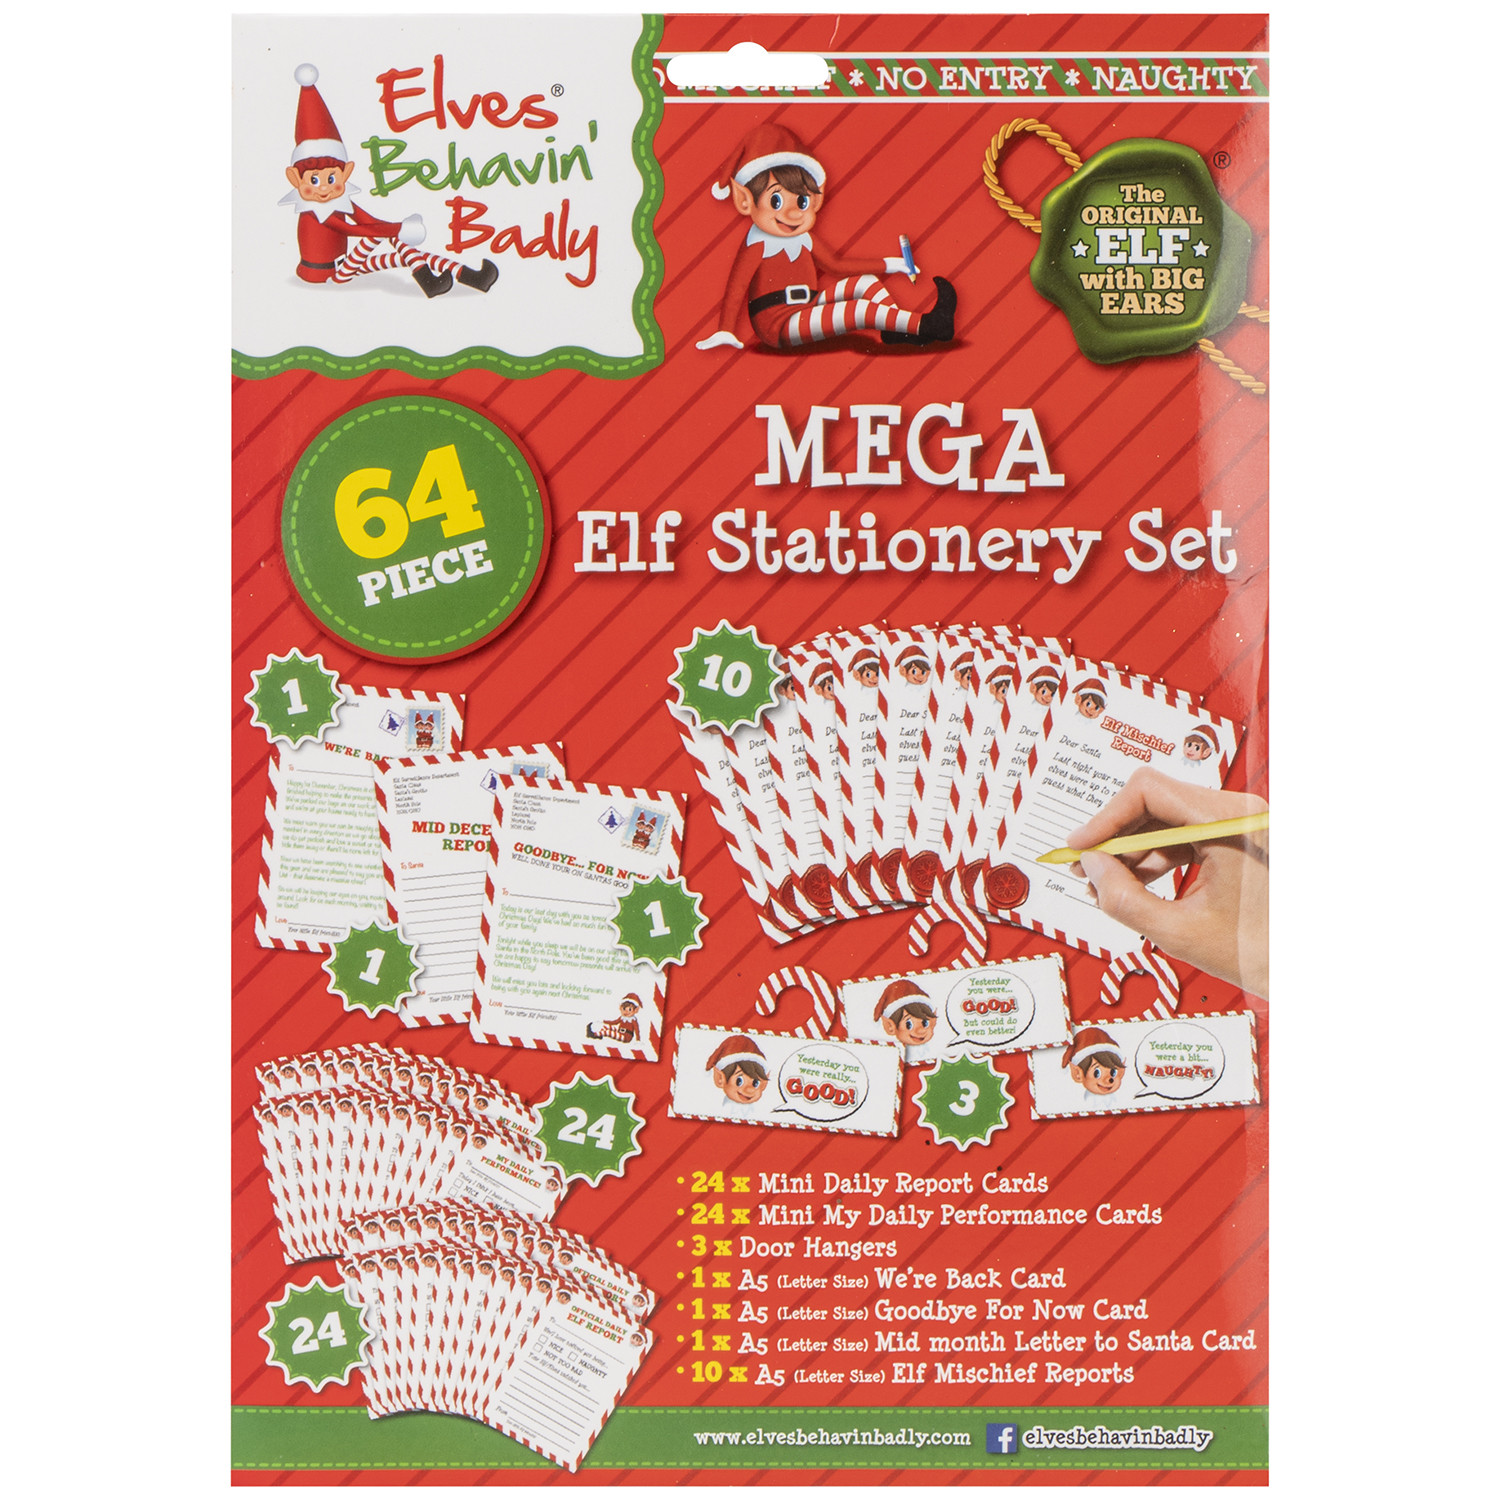 Mega Elf Stationery Set Image